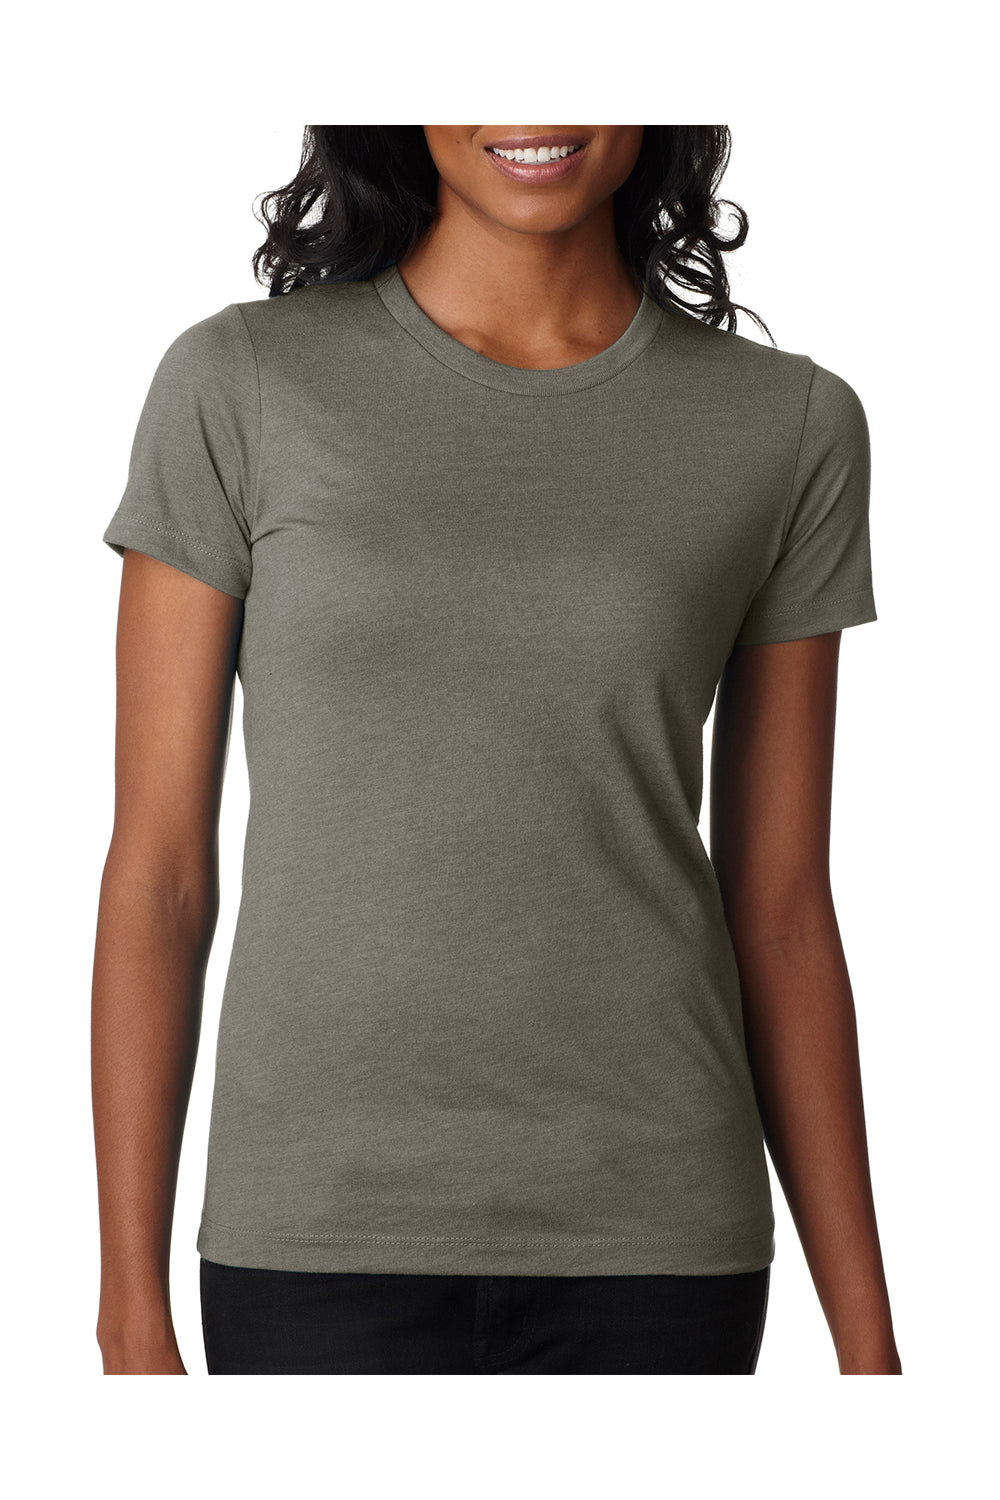 Next Level 6610 Womens CVC Jersey Short Sleeve Crewneck T-Shirt Warm Grey Front